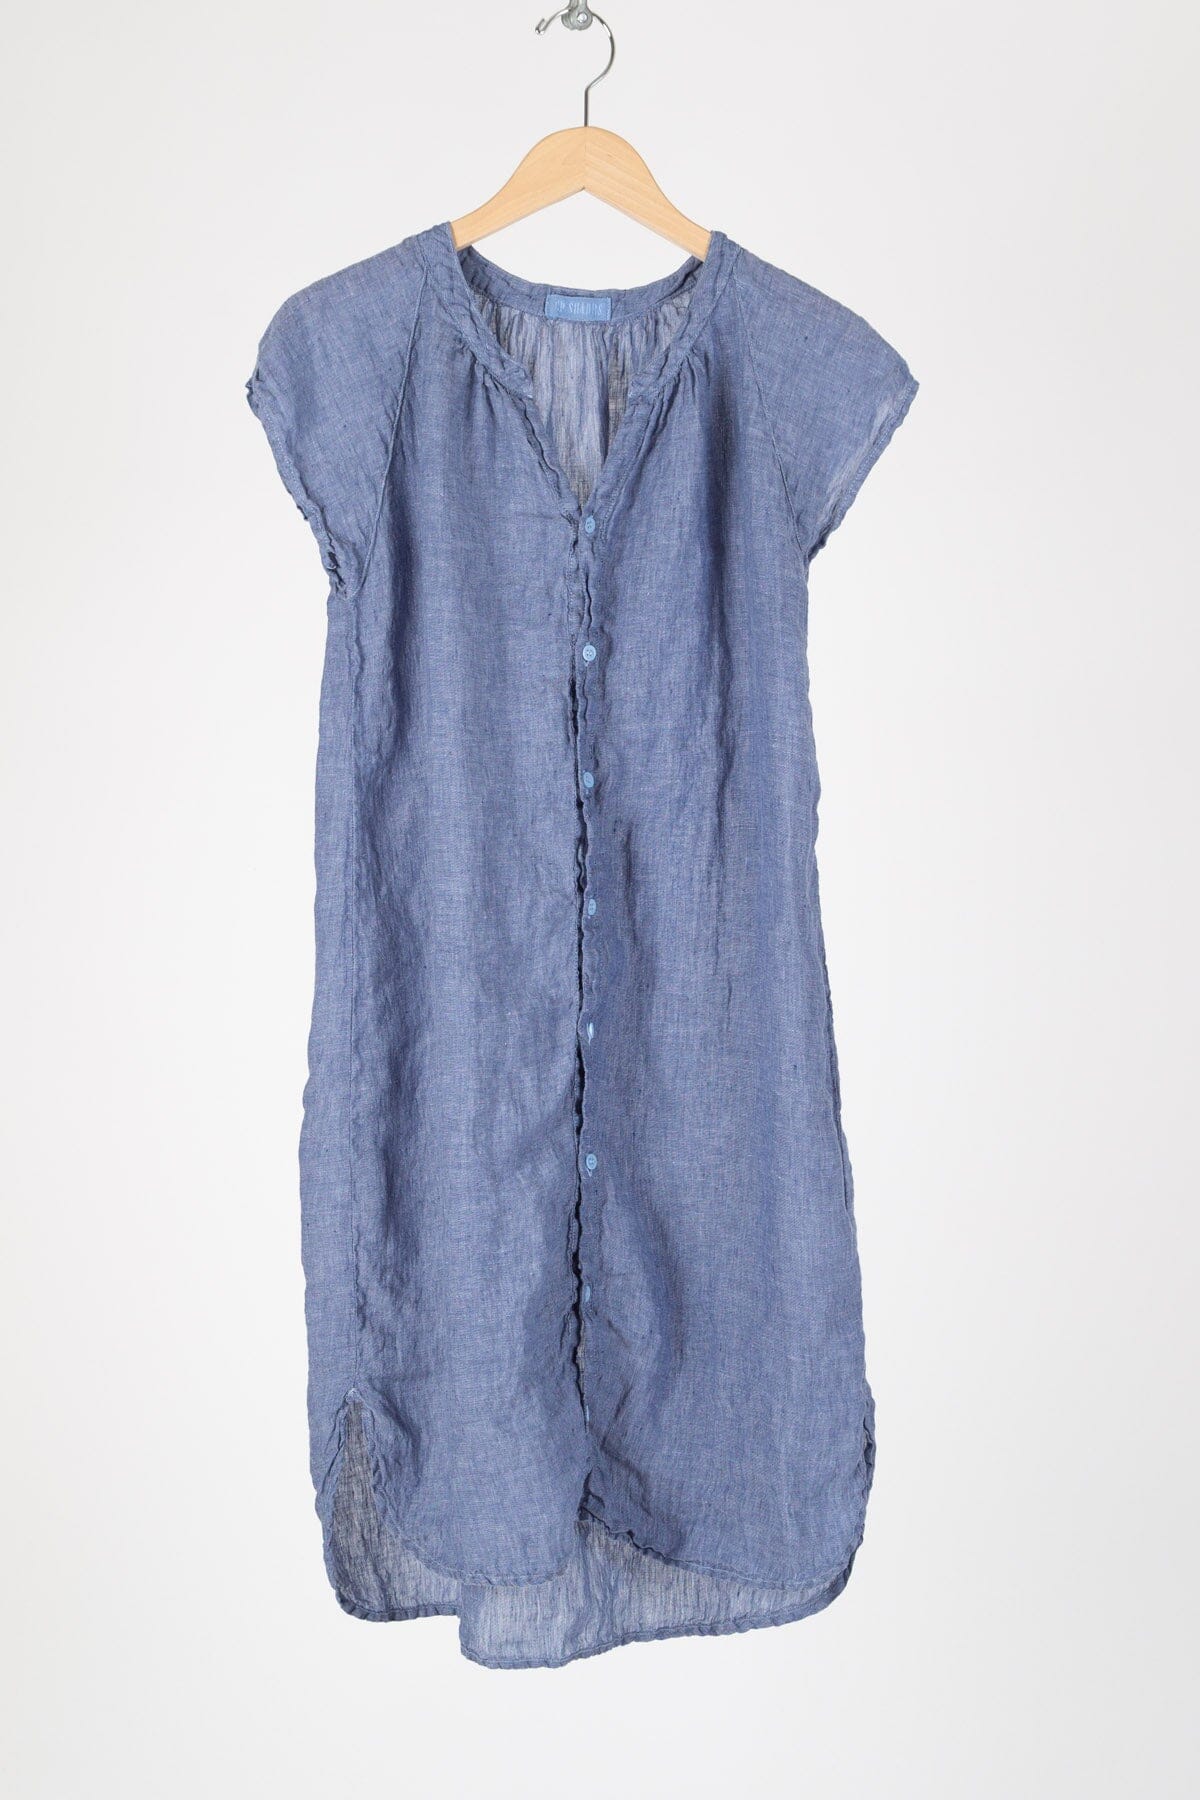 Lucille - Iridescent Linen S15 - Iridescent Skirts/Dresses CP Shades cape blue 162